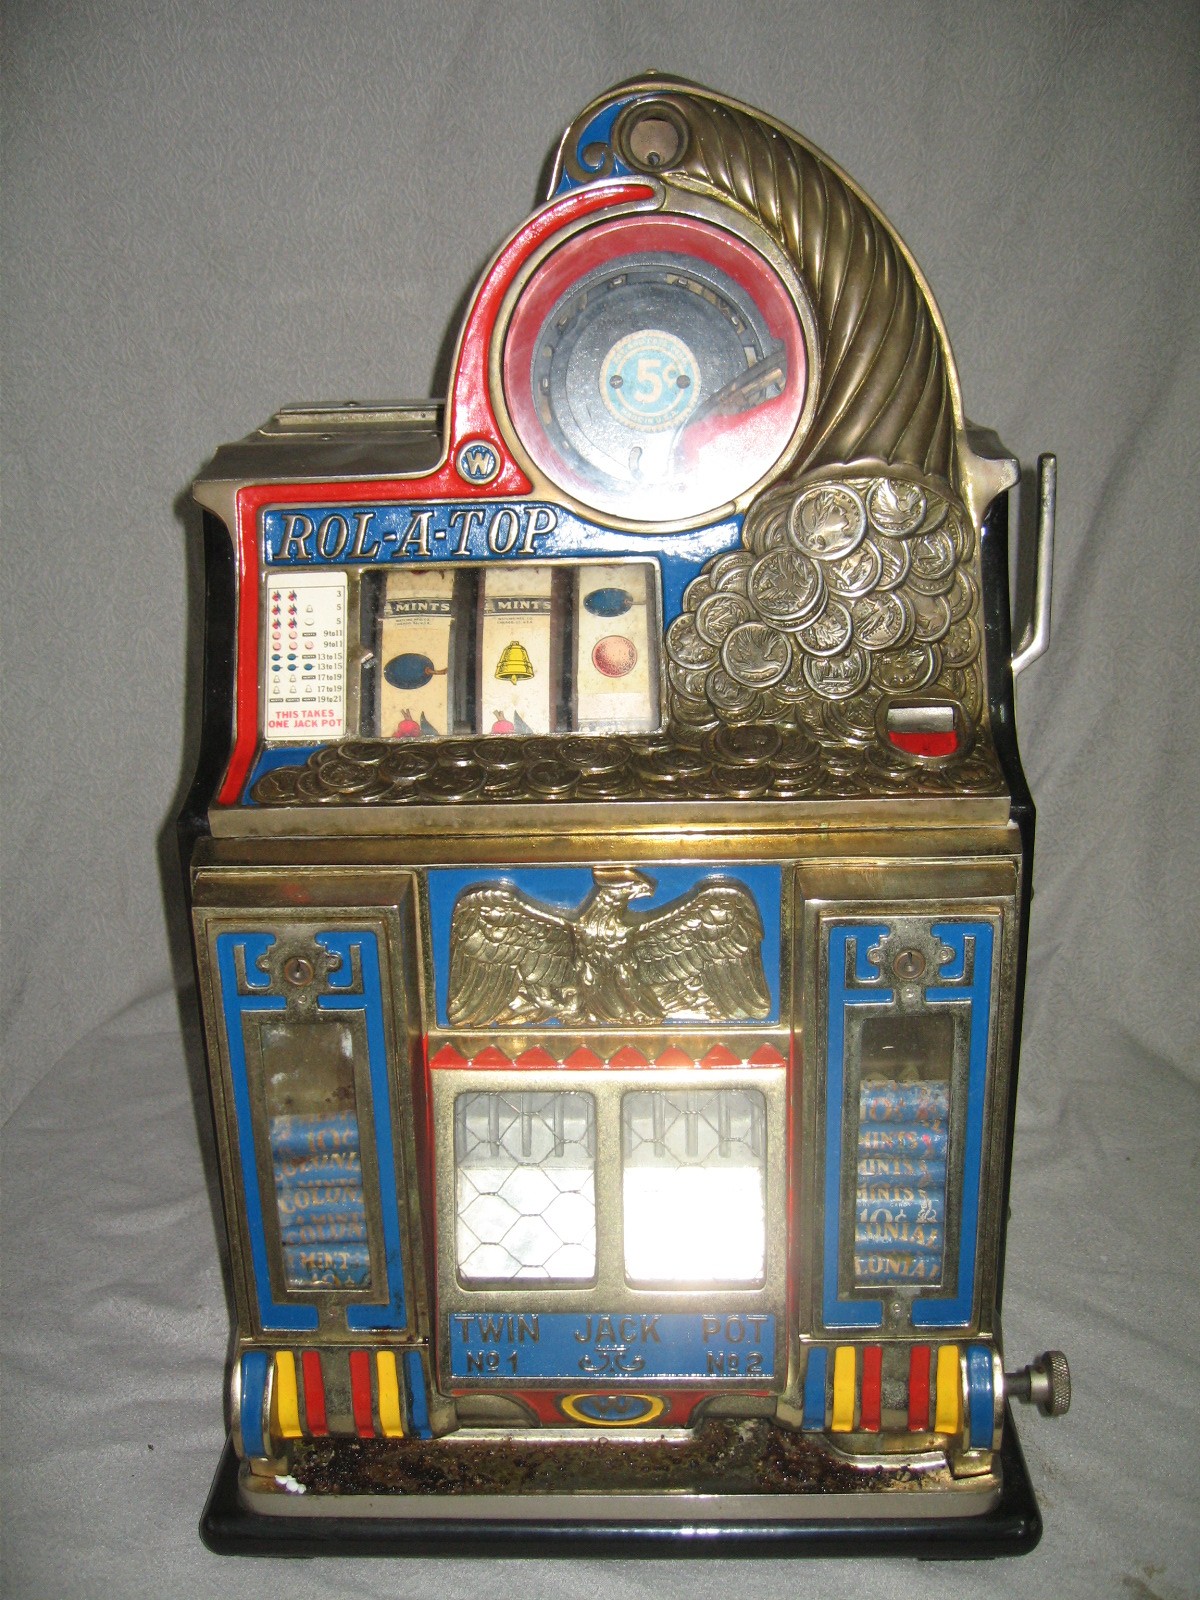 Selling antique slot machines